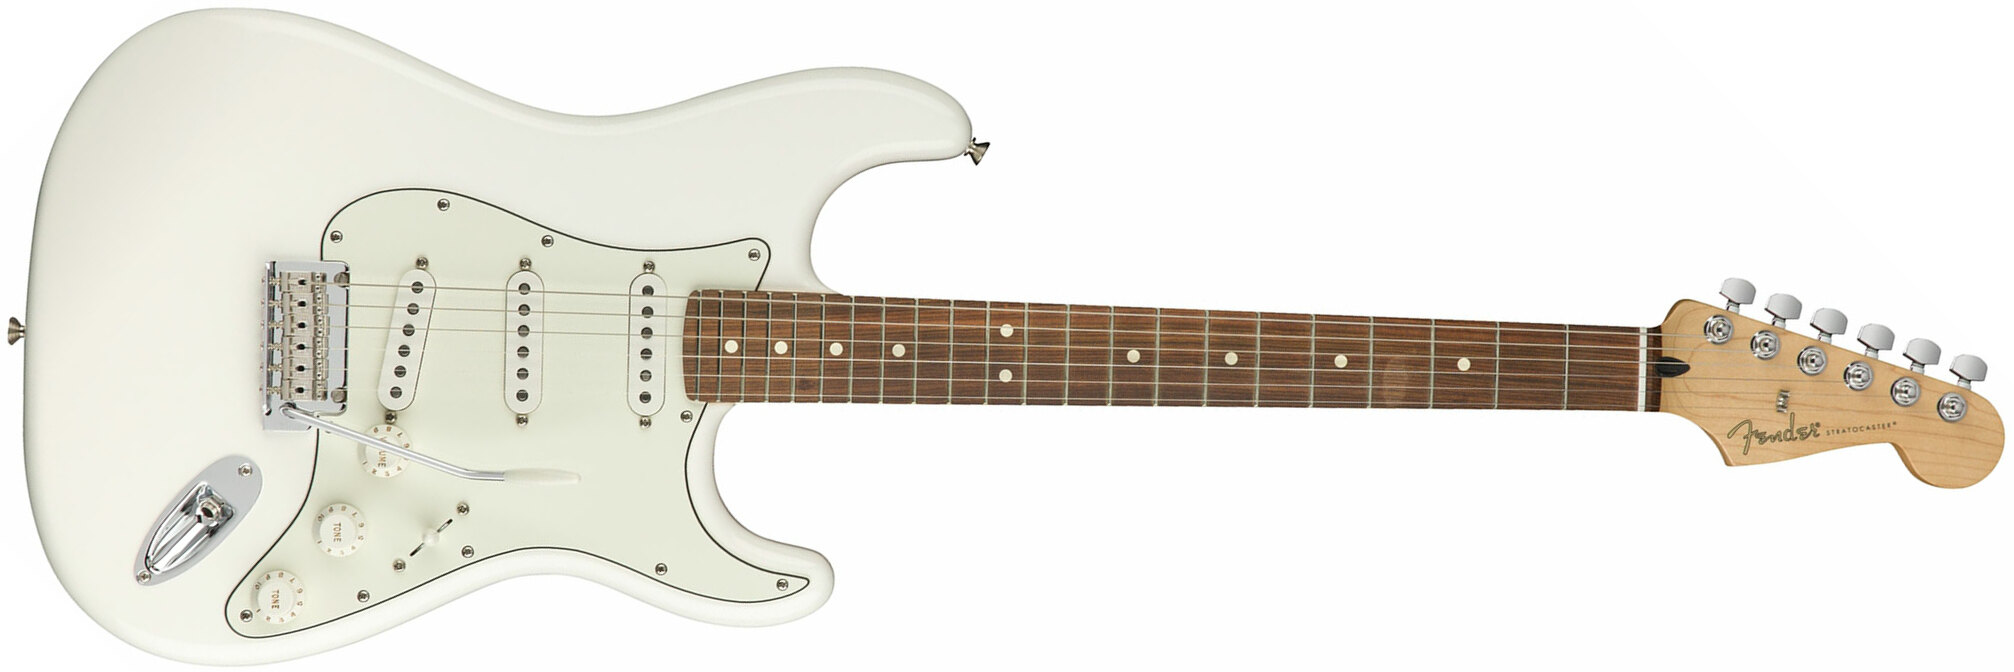 Fender Strat Player Mex Sss Pf - Polar White - Guitarra eléctrica con forma de str. - Main picture